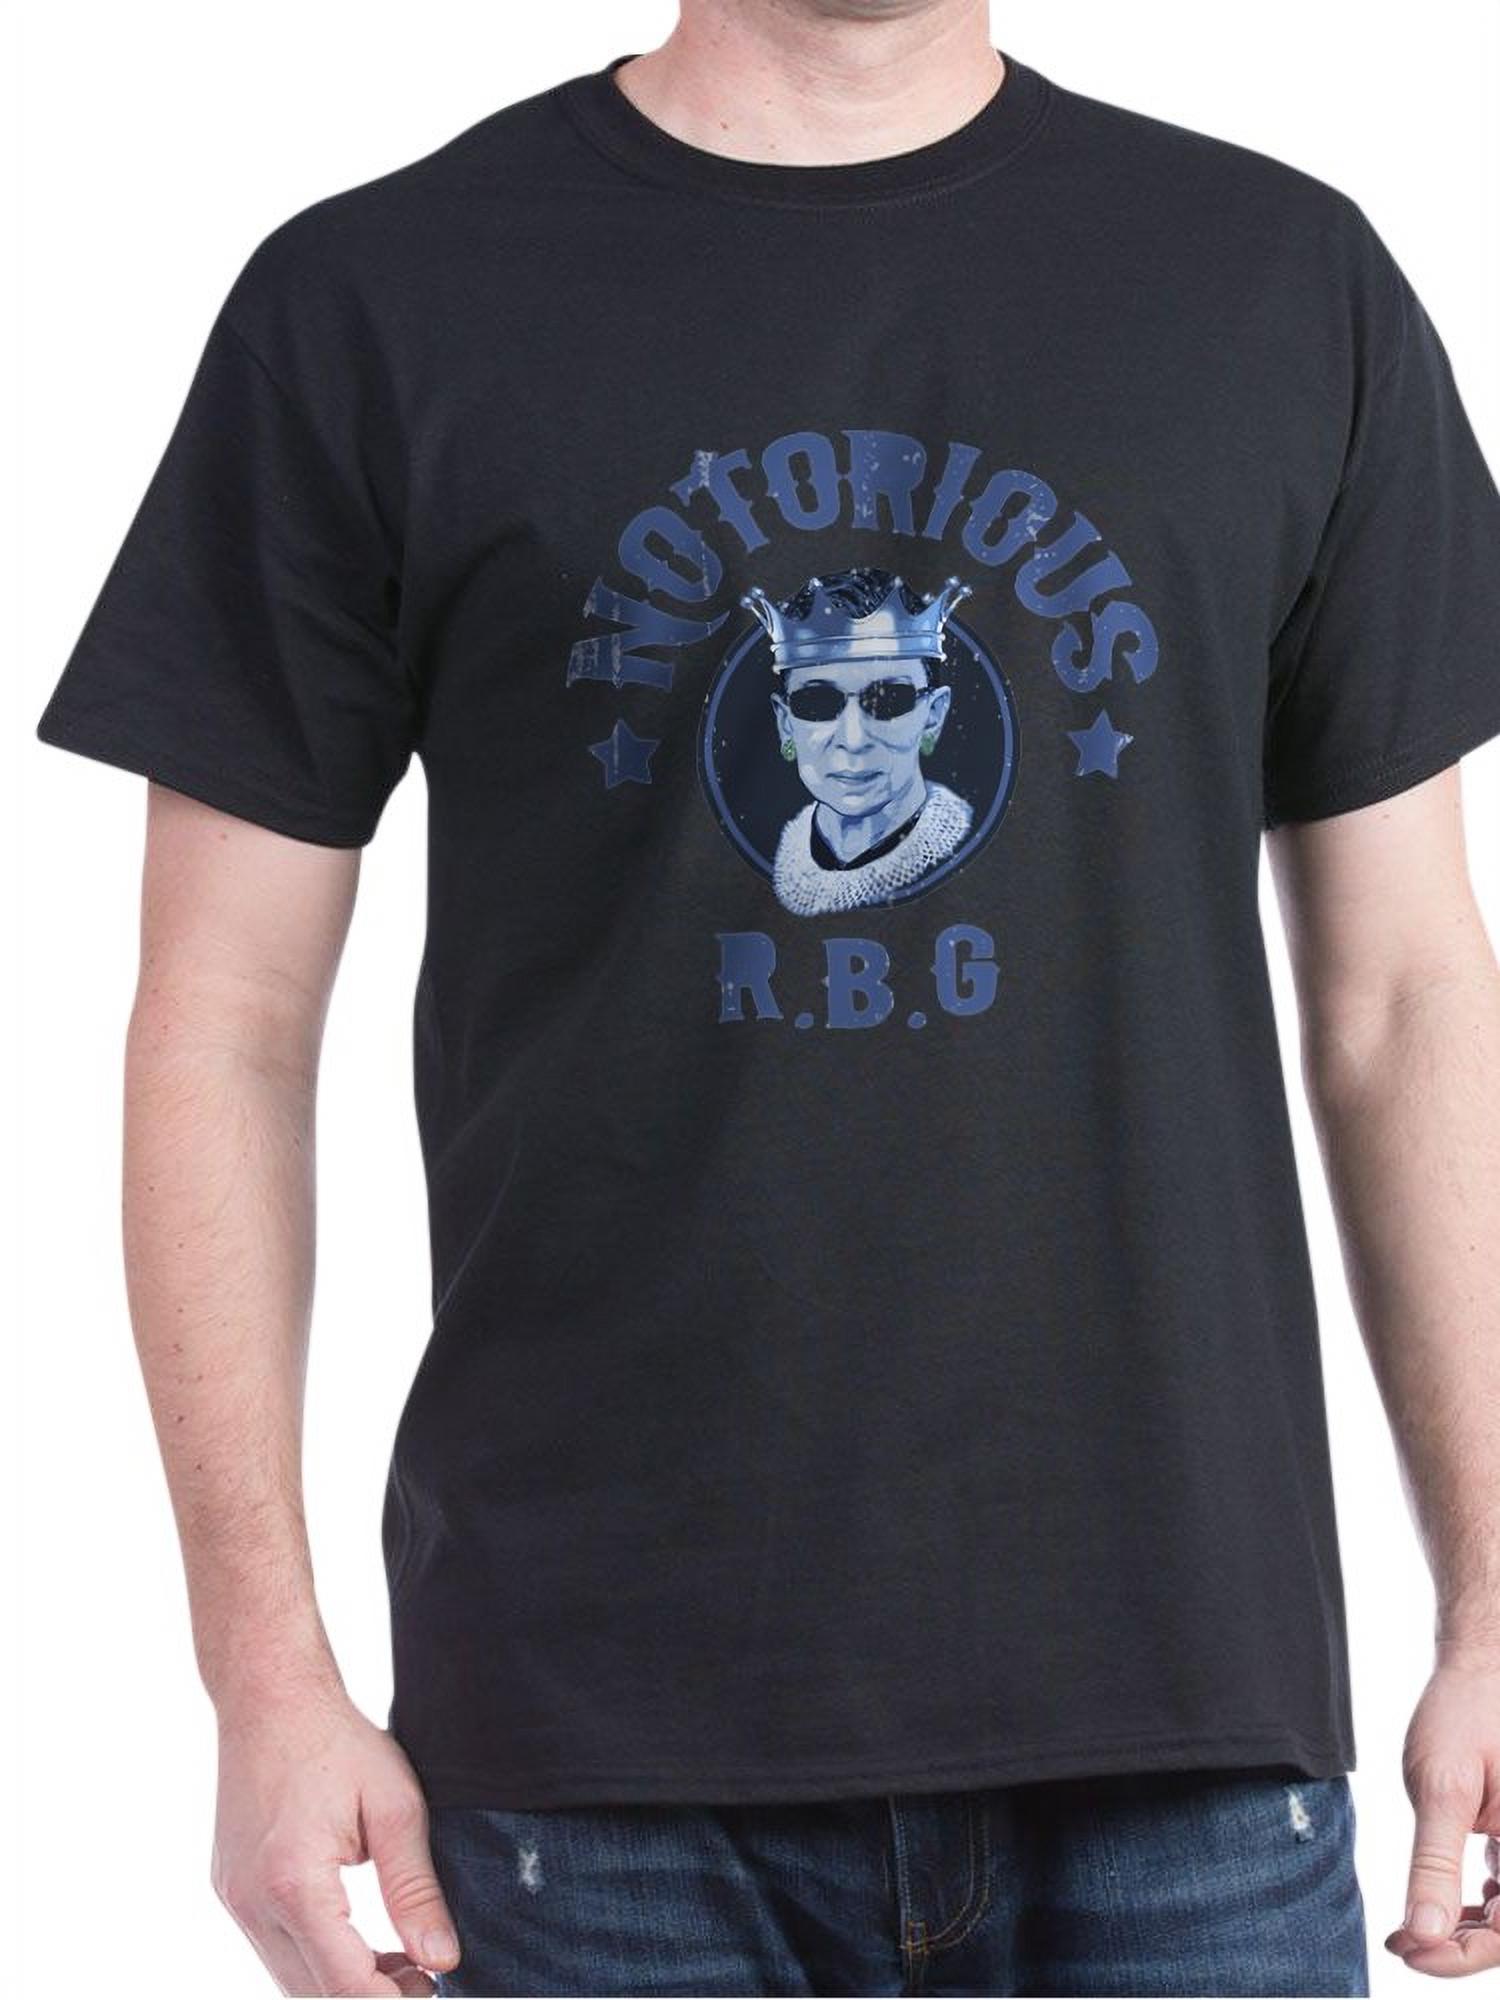 CafePress - Notorious RBG III Dark T Shirt - 100% Cotton T-Shirt - image 1 of 1